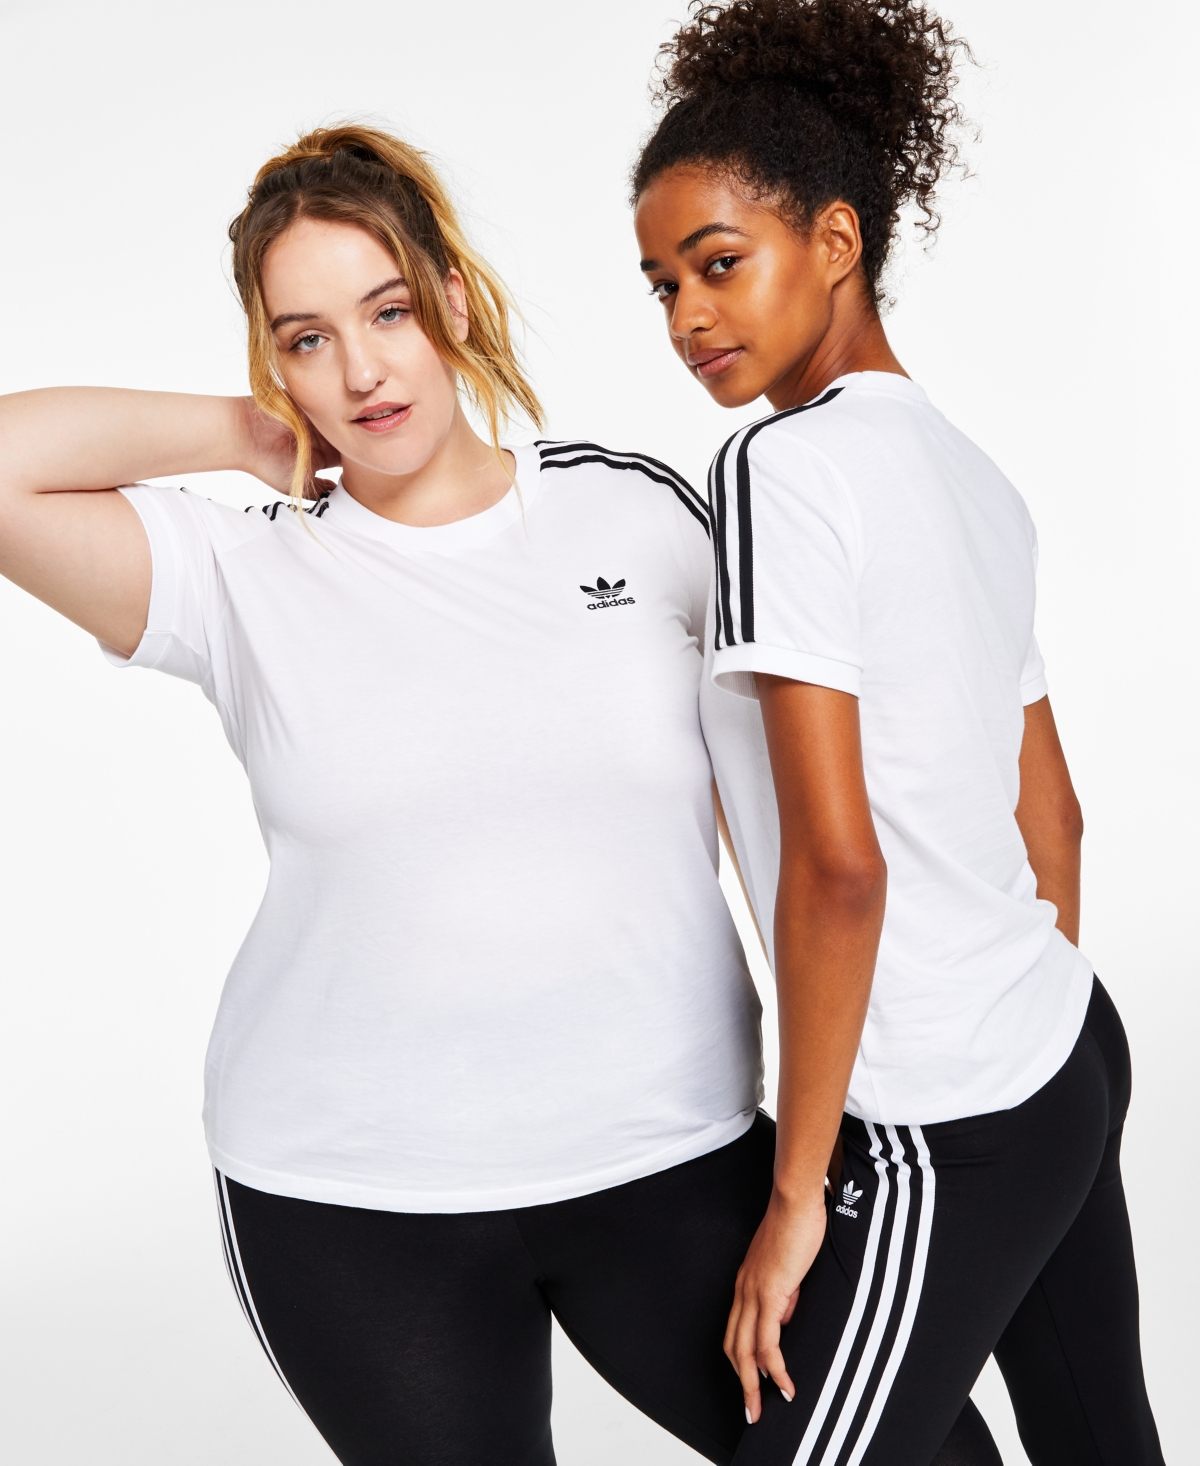  adidas Originals Women's Cotton 3 Stripes T-Shirt, Xs-4X